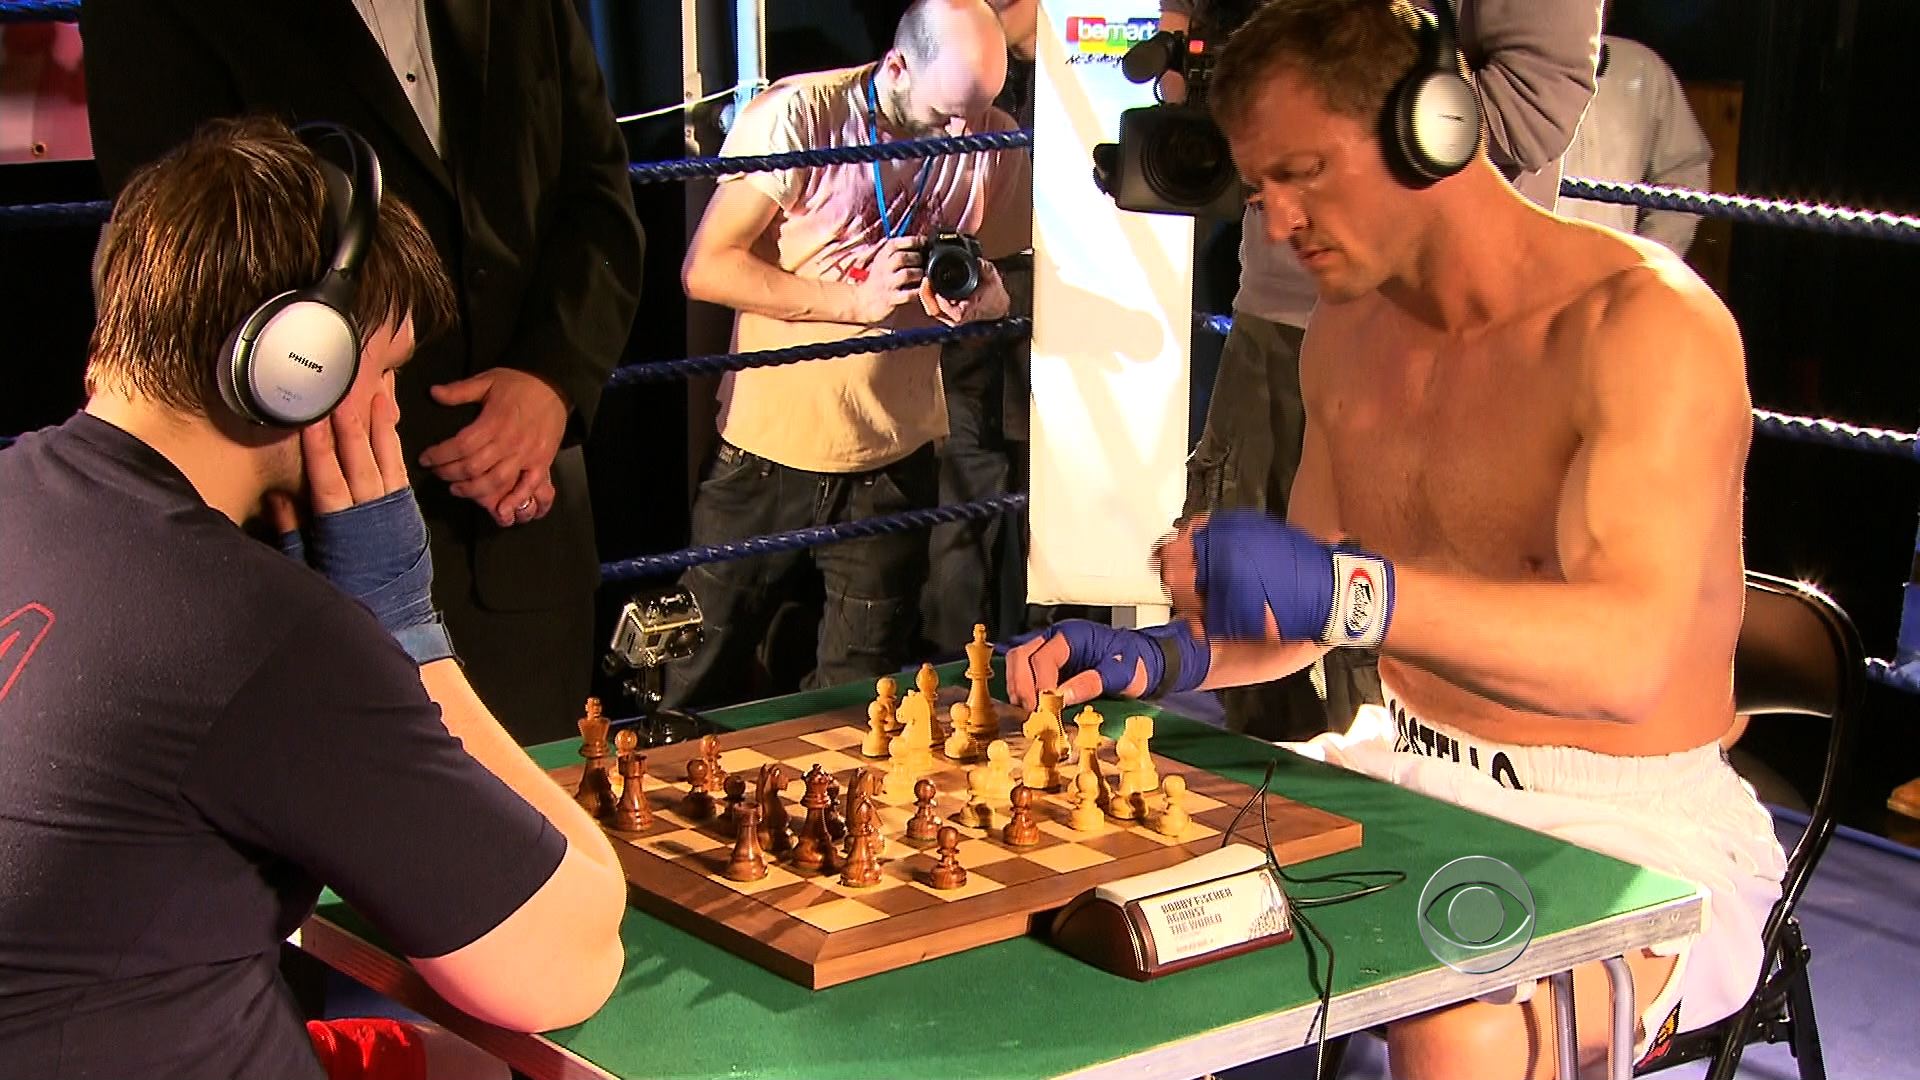 Chessboxing Nation 